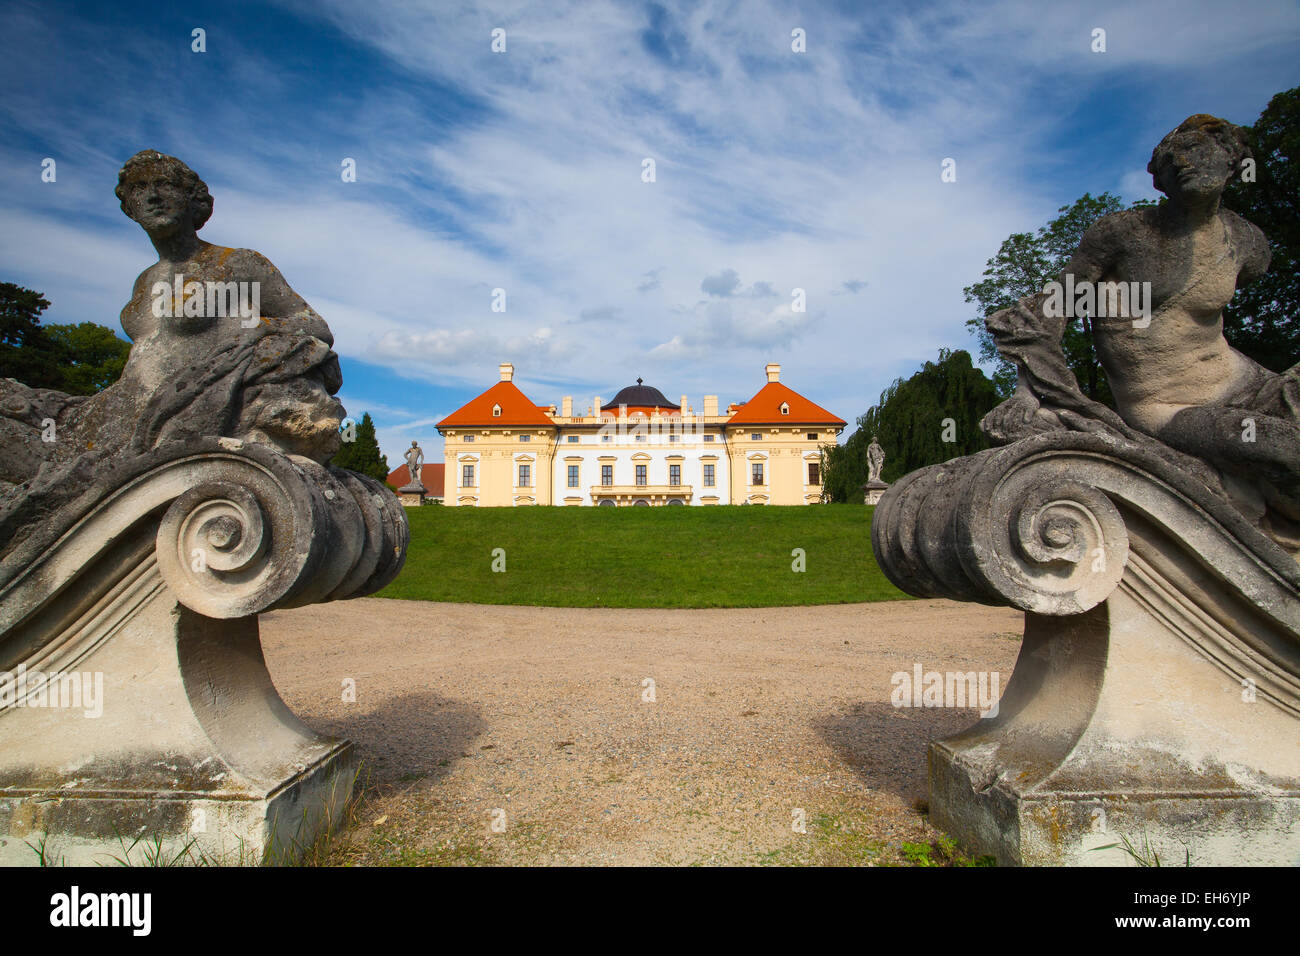 Slavkov, Tschechische Republik - 20. August 2014: Barockschloss (nationales Kulturdenkmal) in Slavkov - Austerlitz bei Brünn Stockfoto